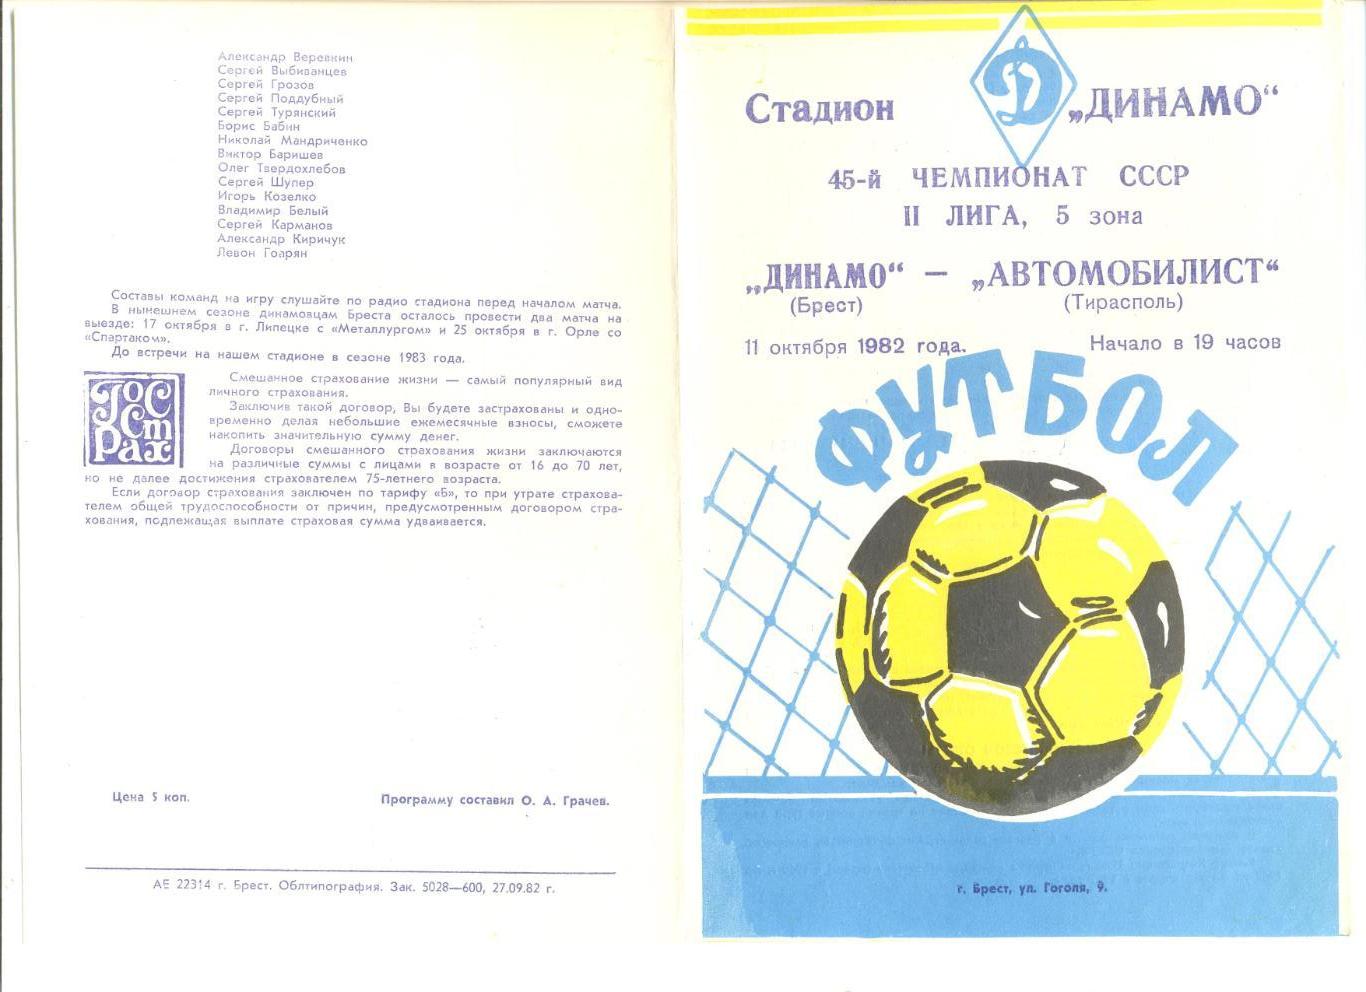 Динамо Брест - Автомобилист Тирасполь 11.10.1982 г.